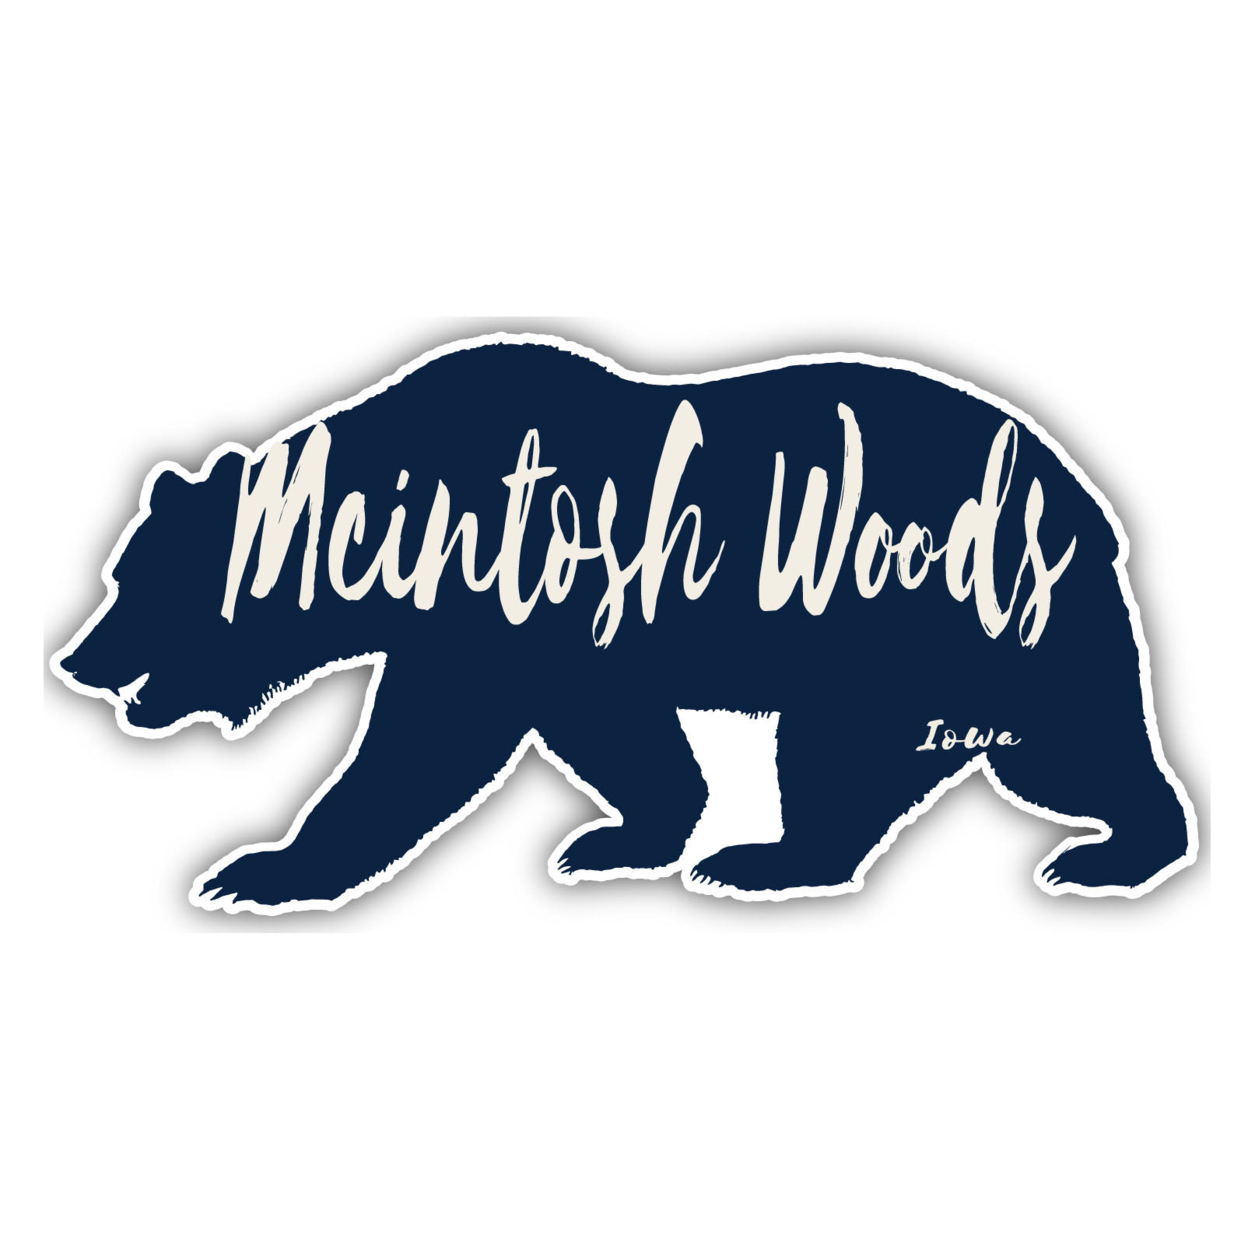 Mcintosh Woods Iowa Souvenir Decorative Stickers (Choose Theme And Size) - 4-Inch, Bear